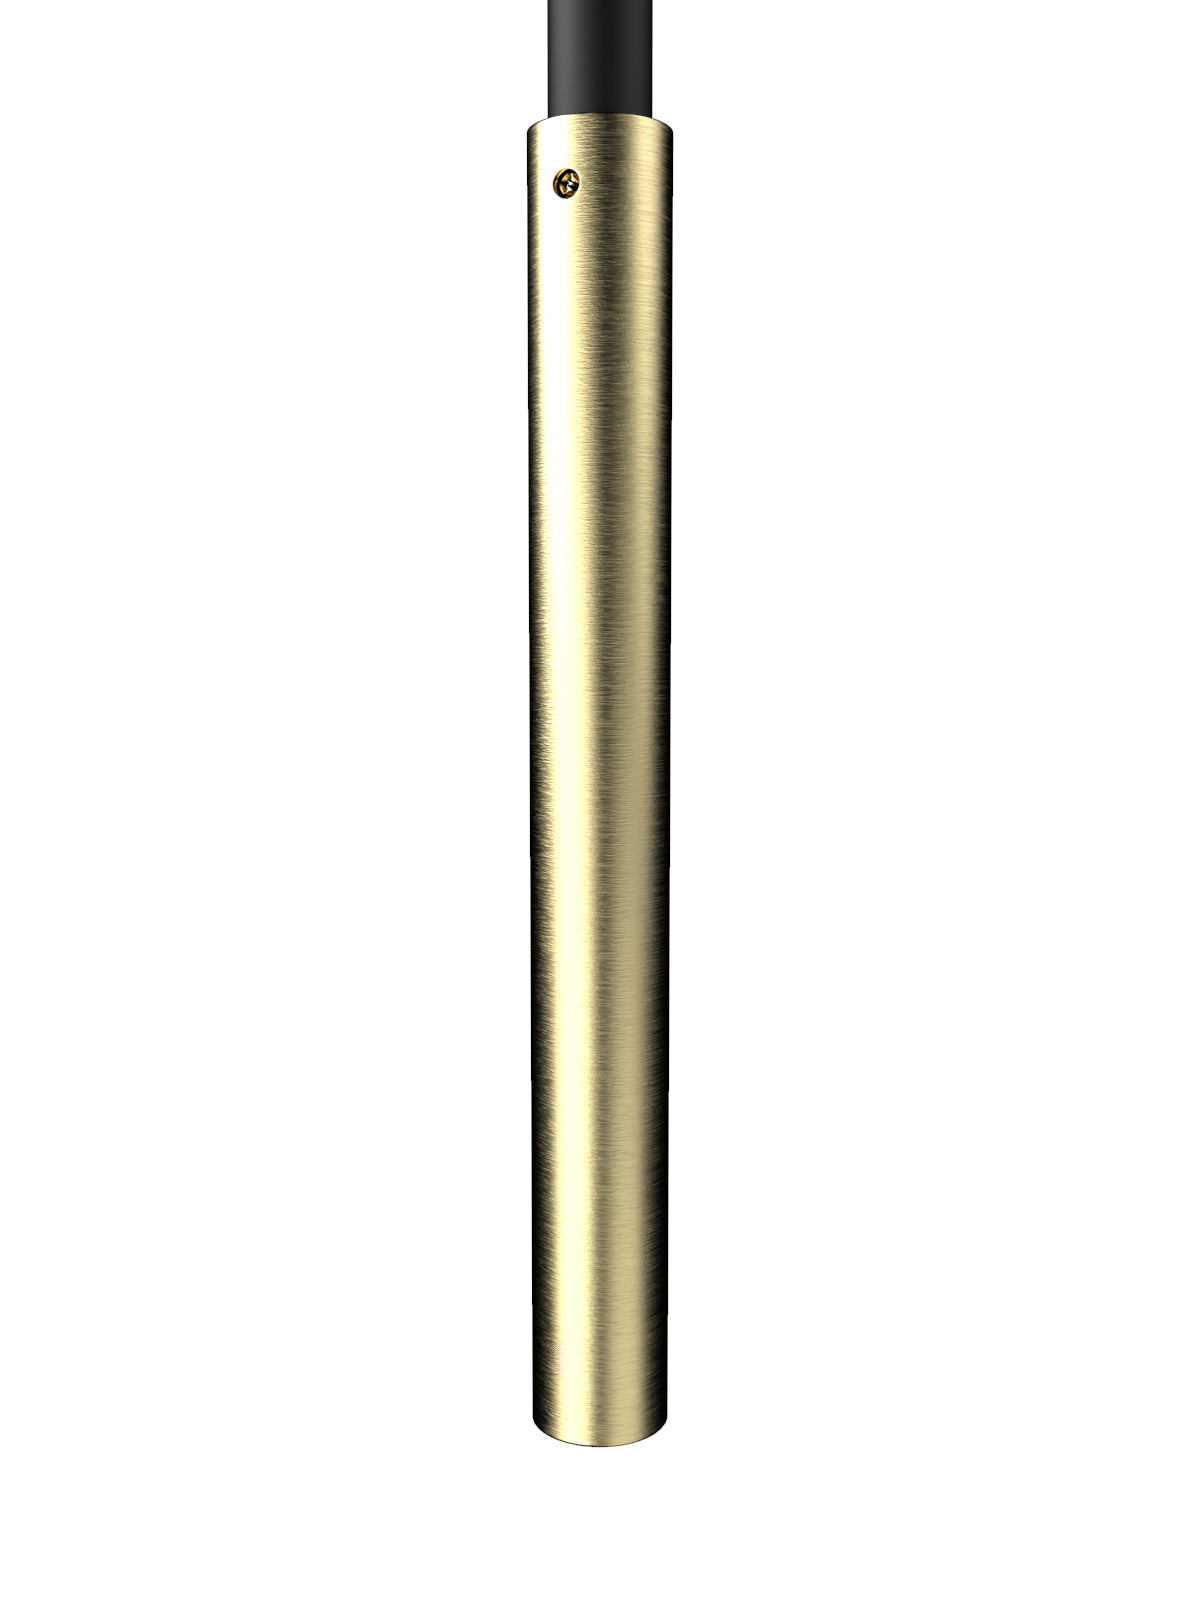 Iron Baluster 2GRBB - 5/8" Round - Brass Ornamentation